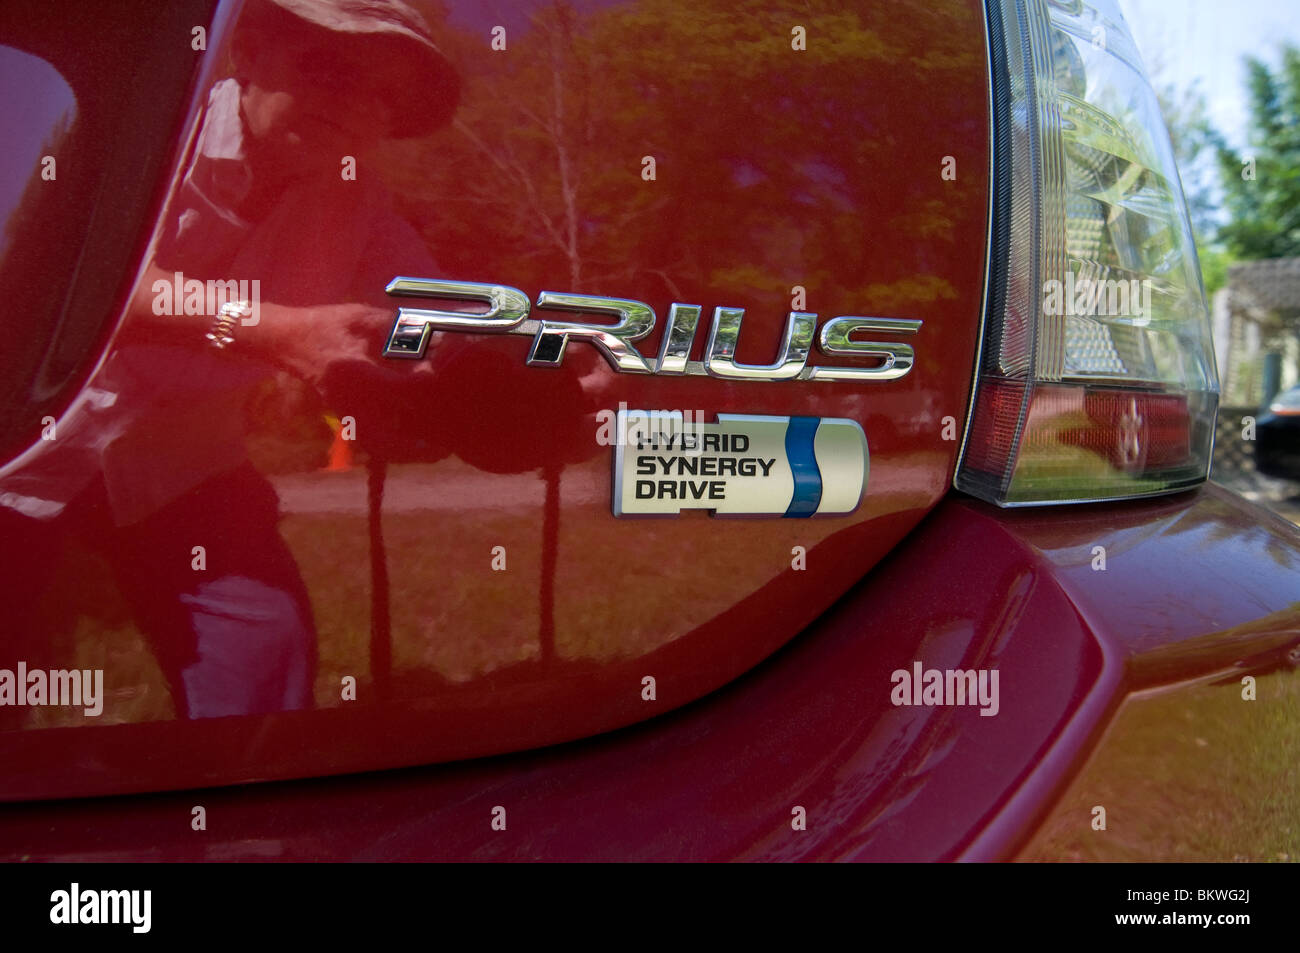 Toyota Prius hybrid car detail lettering Stock Photo